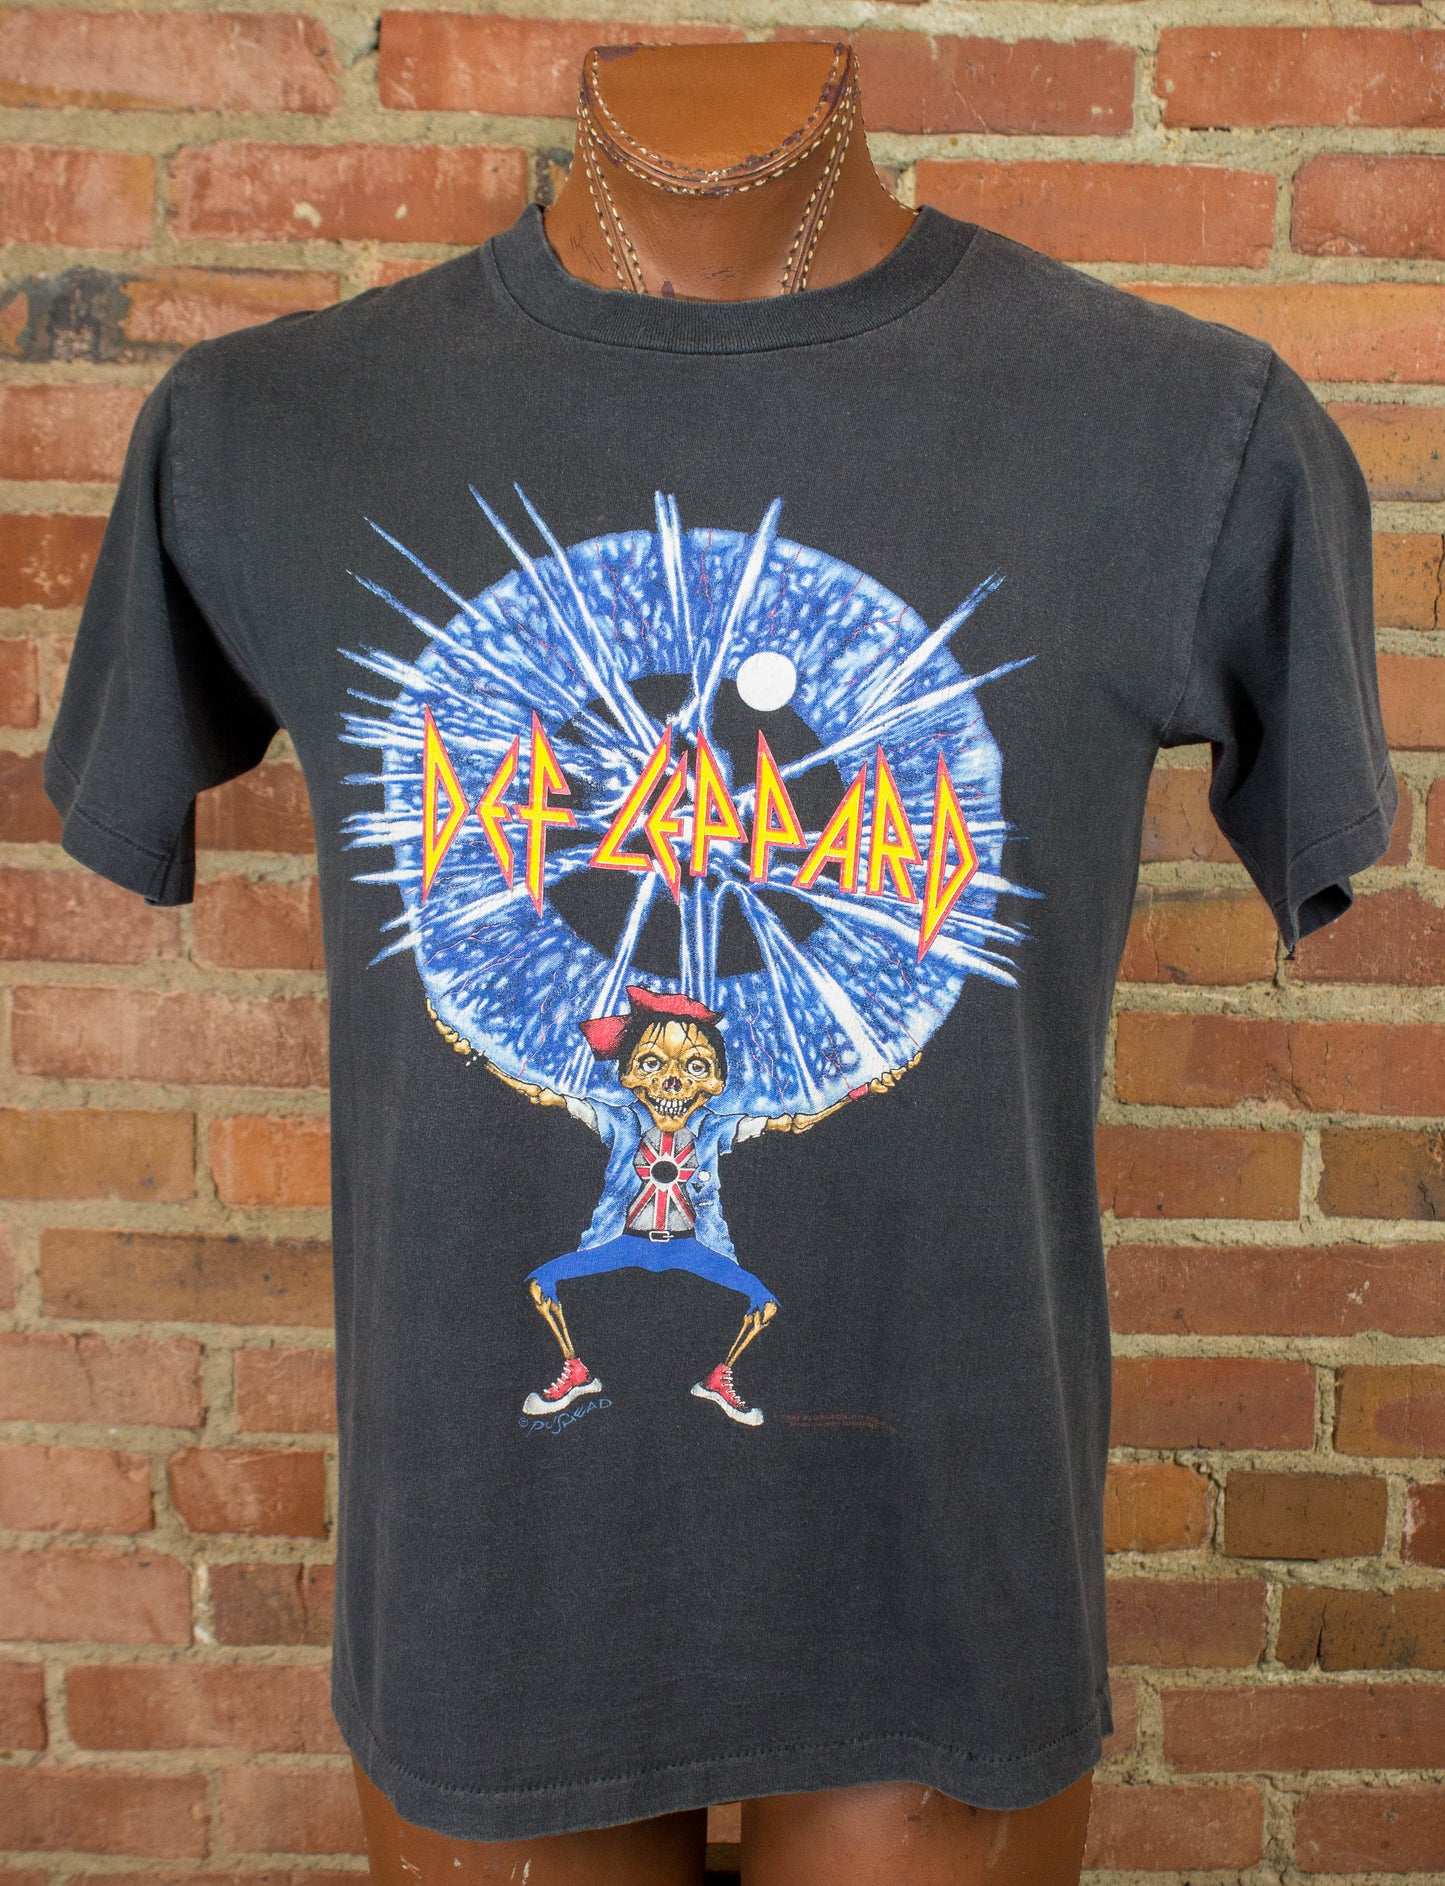 Vintage Def Leppard Concert T Shirt 1992 The Never Ending Weekend Tour Pushead Design Black Large